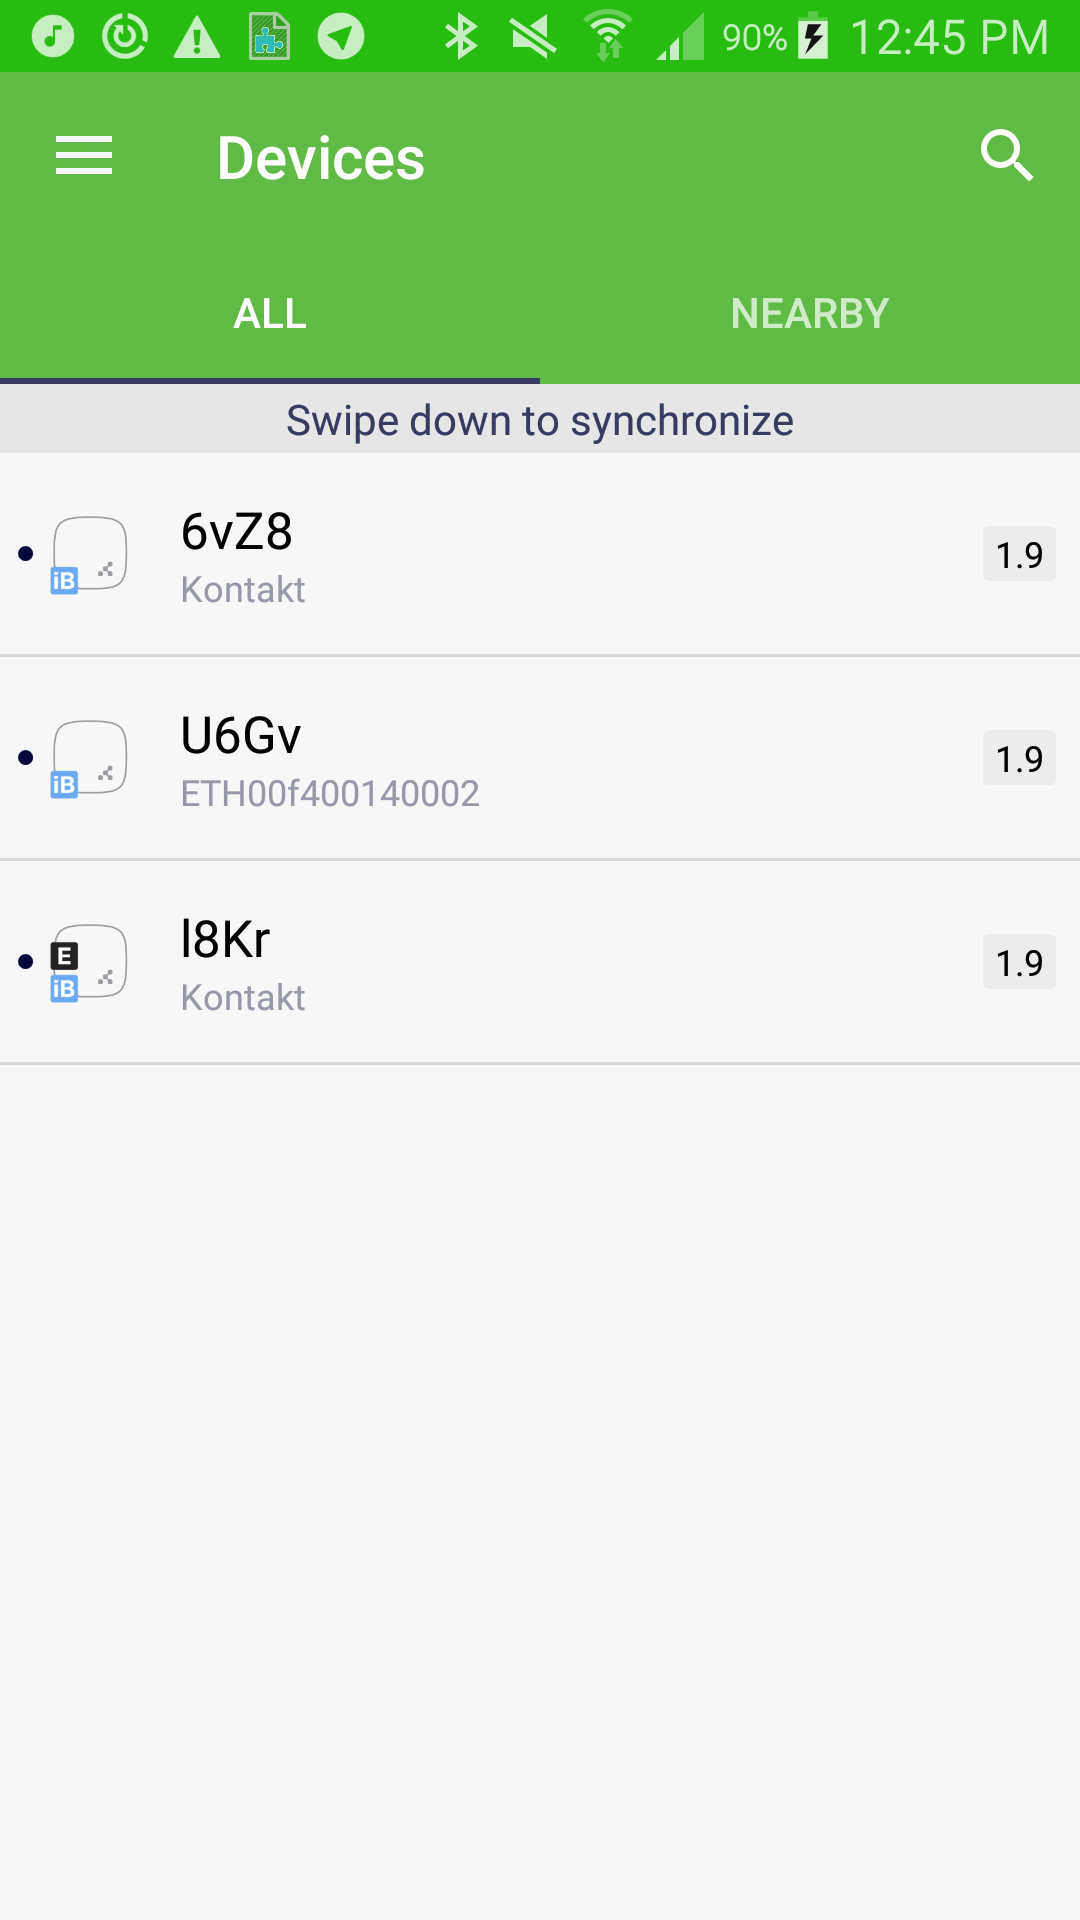 Using Kontakt.IO App to Configure a Beacon